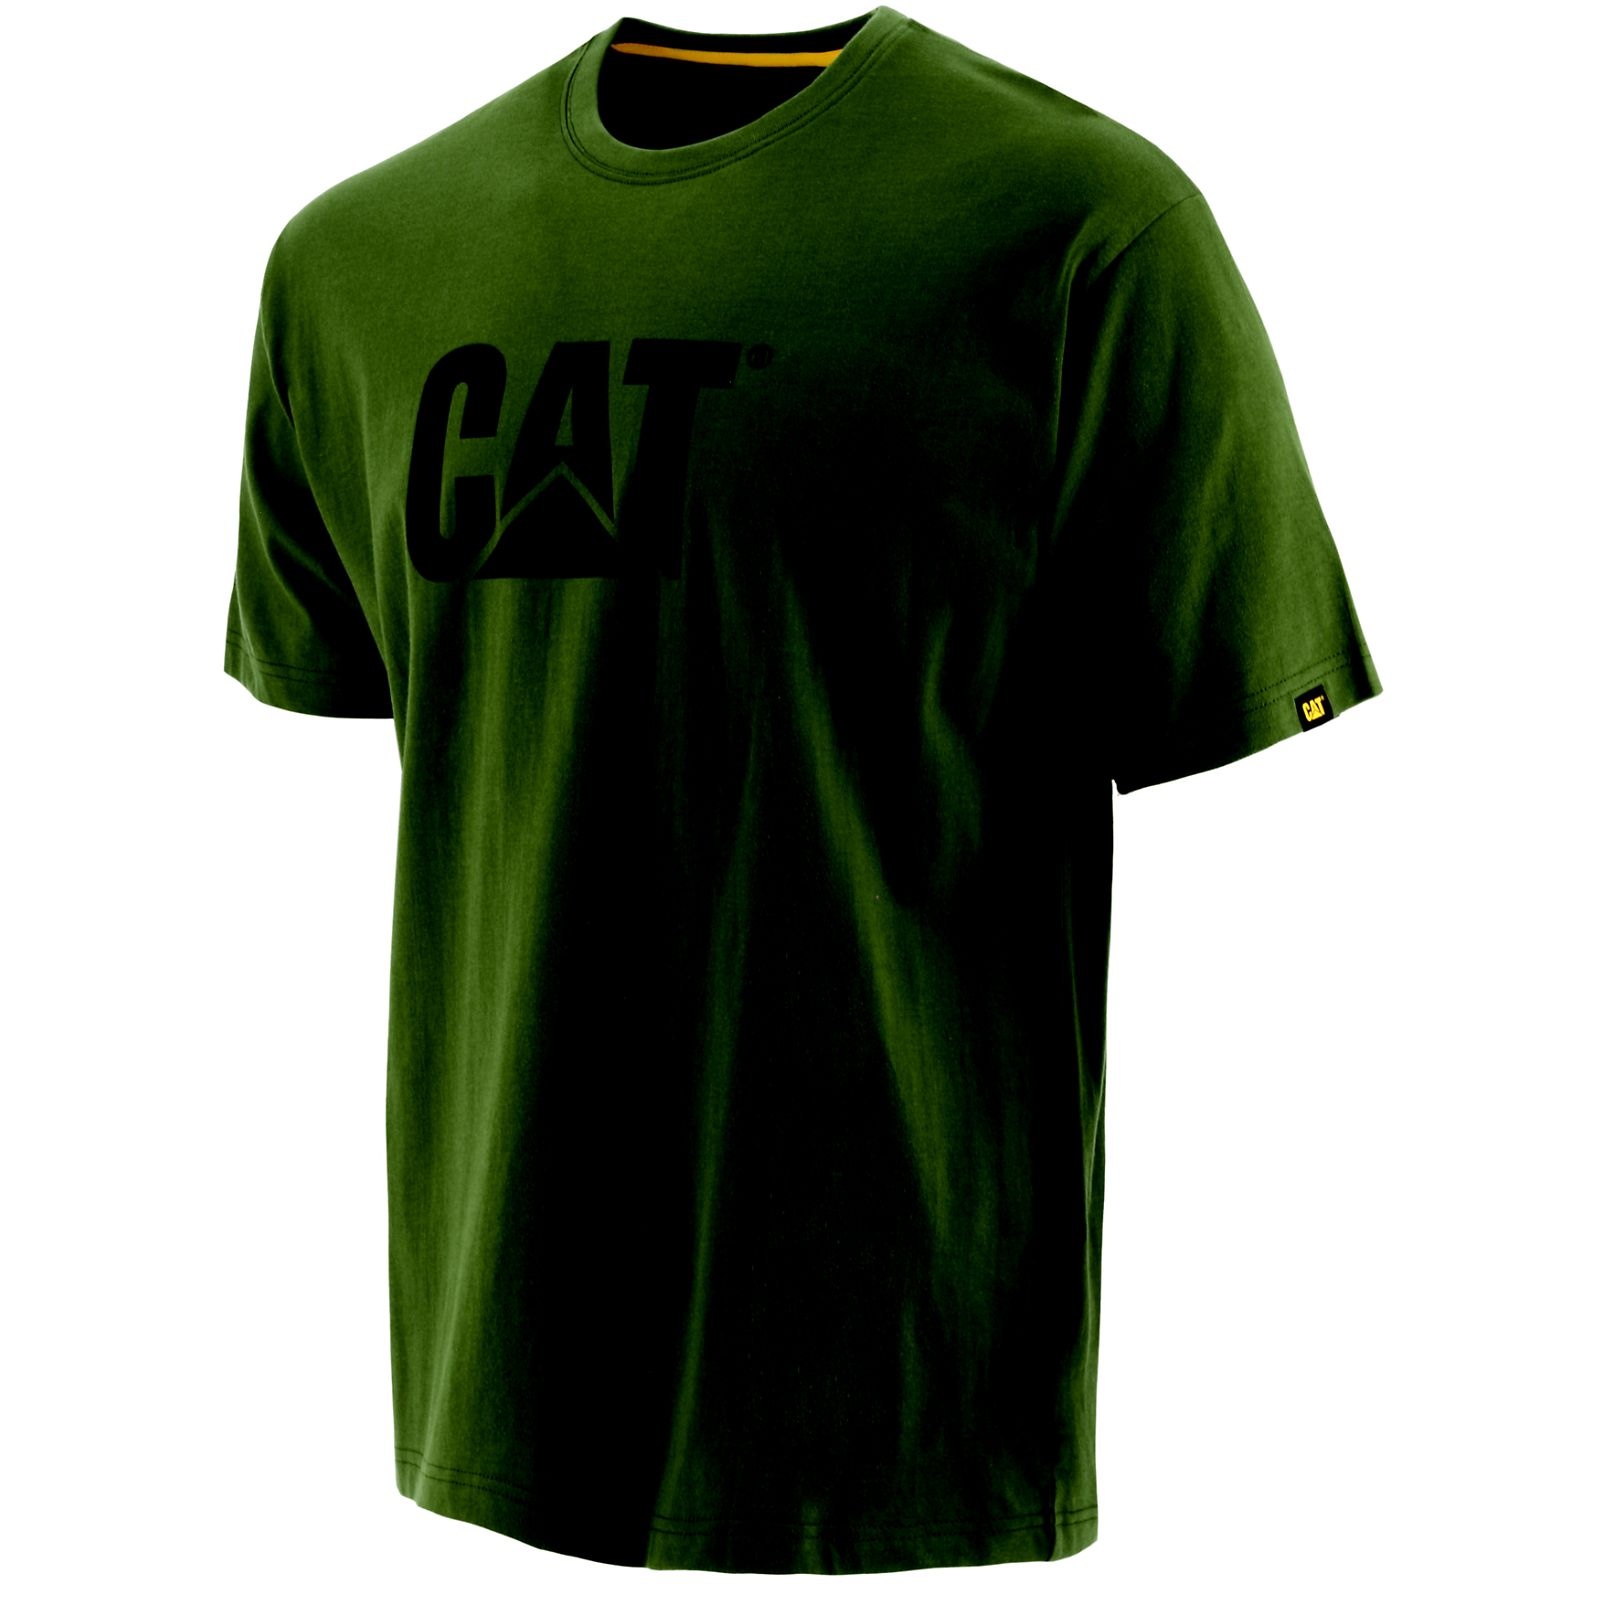 Caterpillar T-Shirts Online UAE - Caterpillar Trademark Mens - Green JRZUKE830